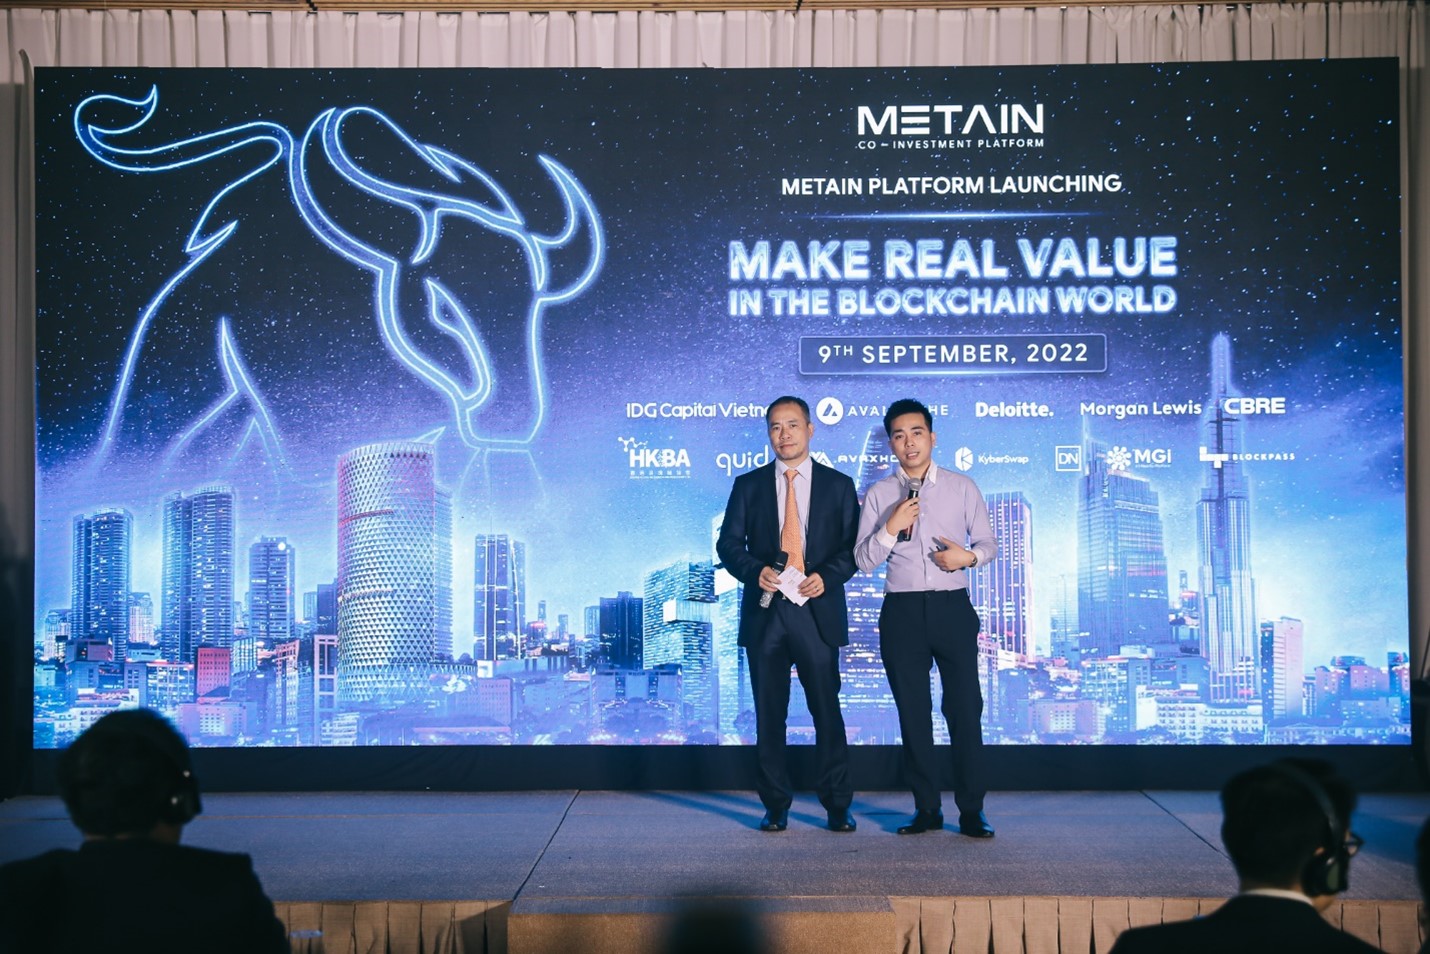 Mr. Duc Tran – IDG Capital Vietnam & Mr. Nhan Tran – CEO of Metain